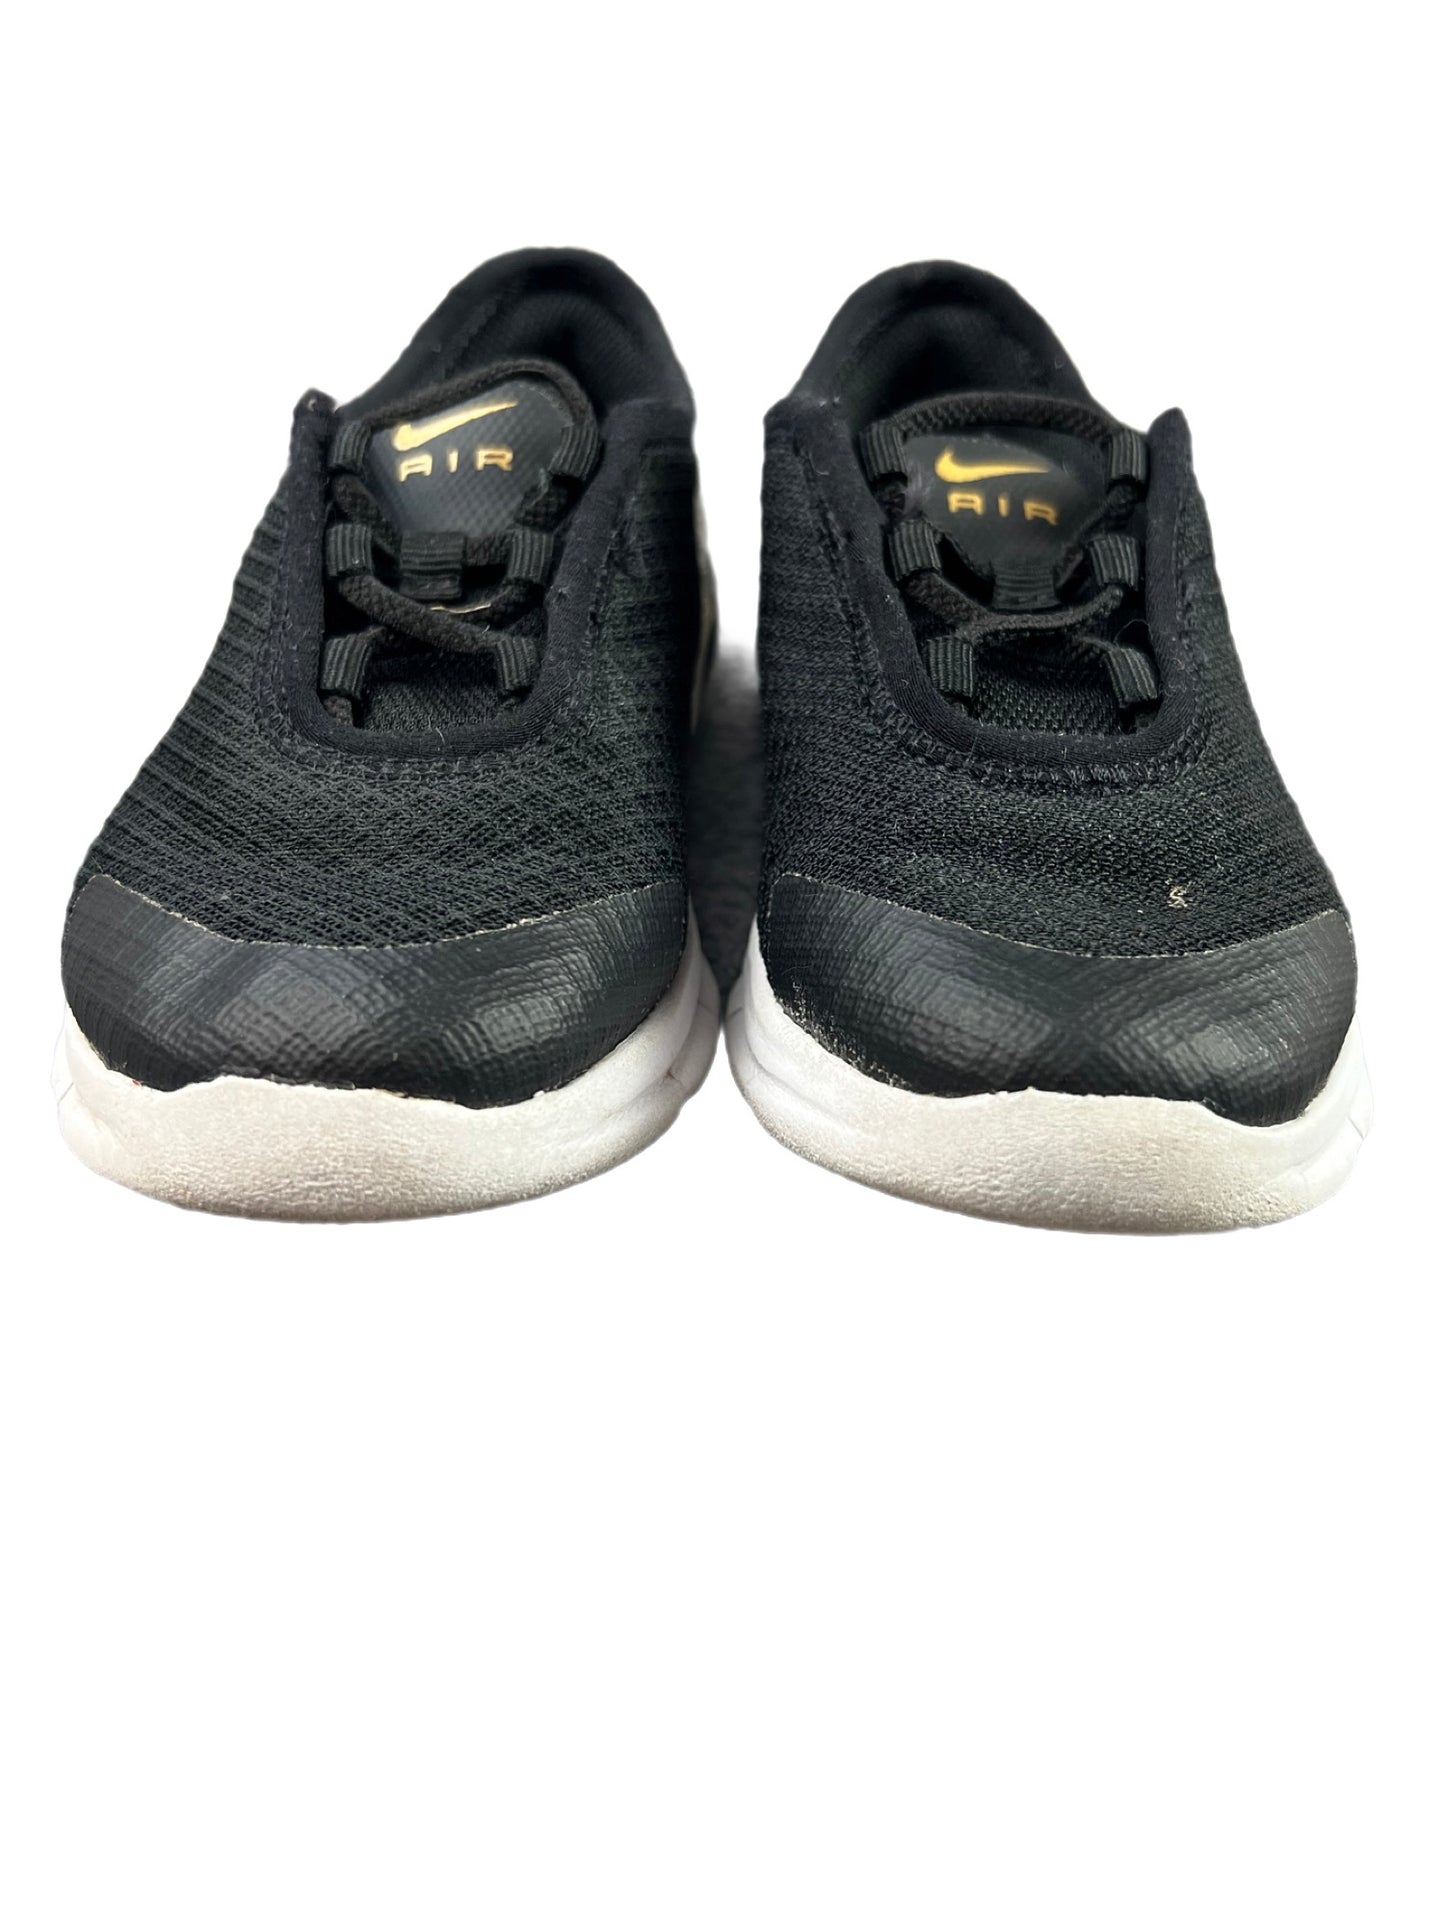 Shoes 10.0 Nike